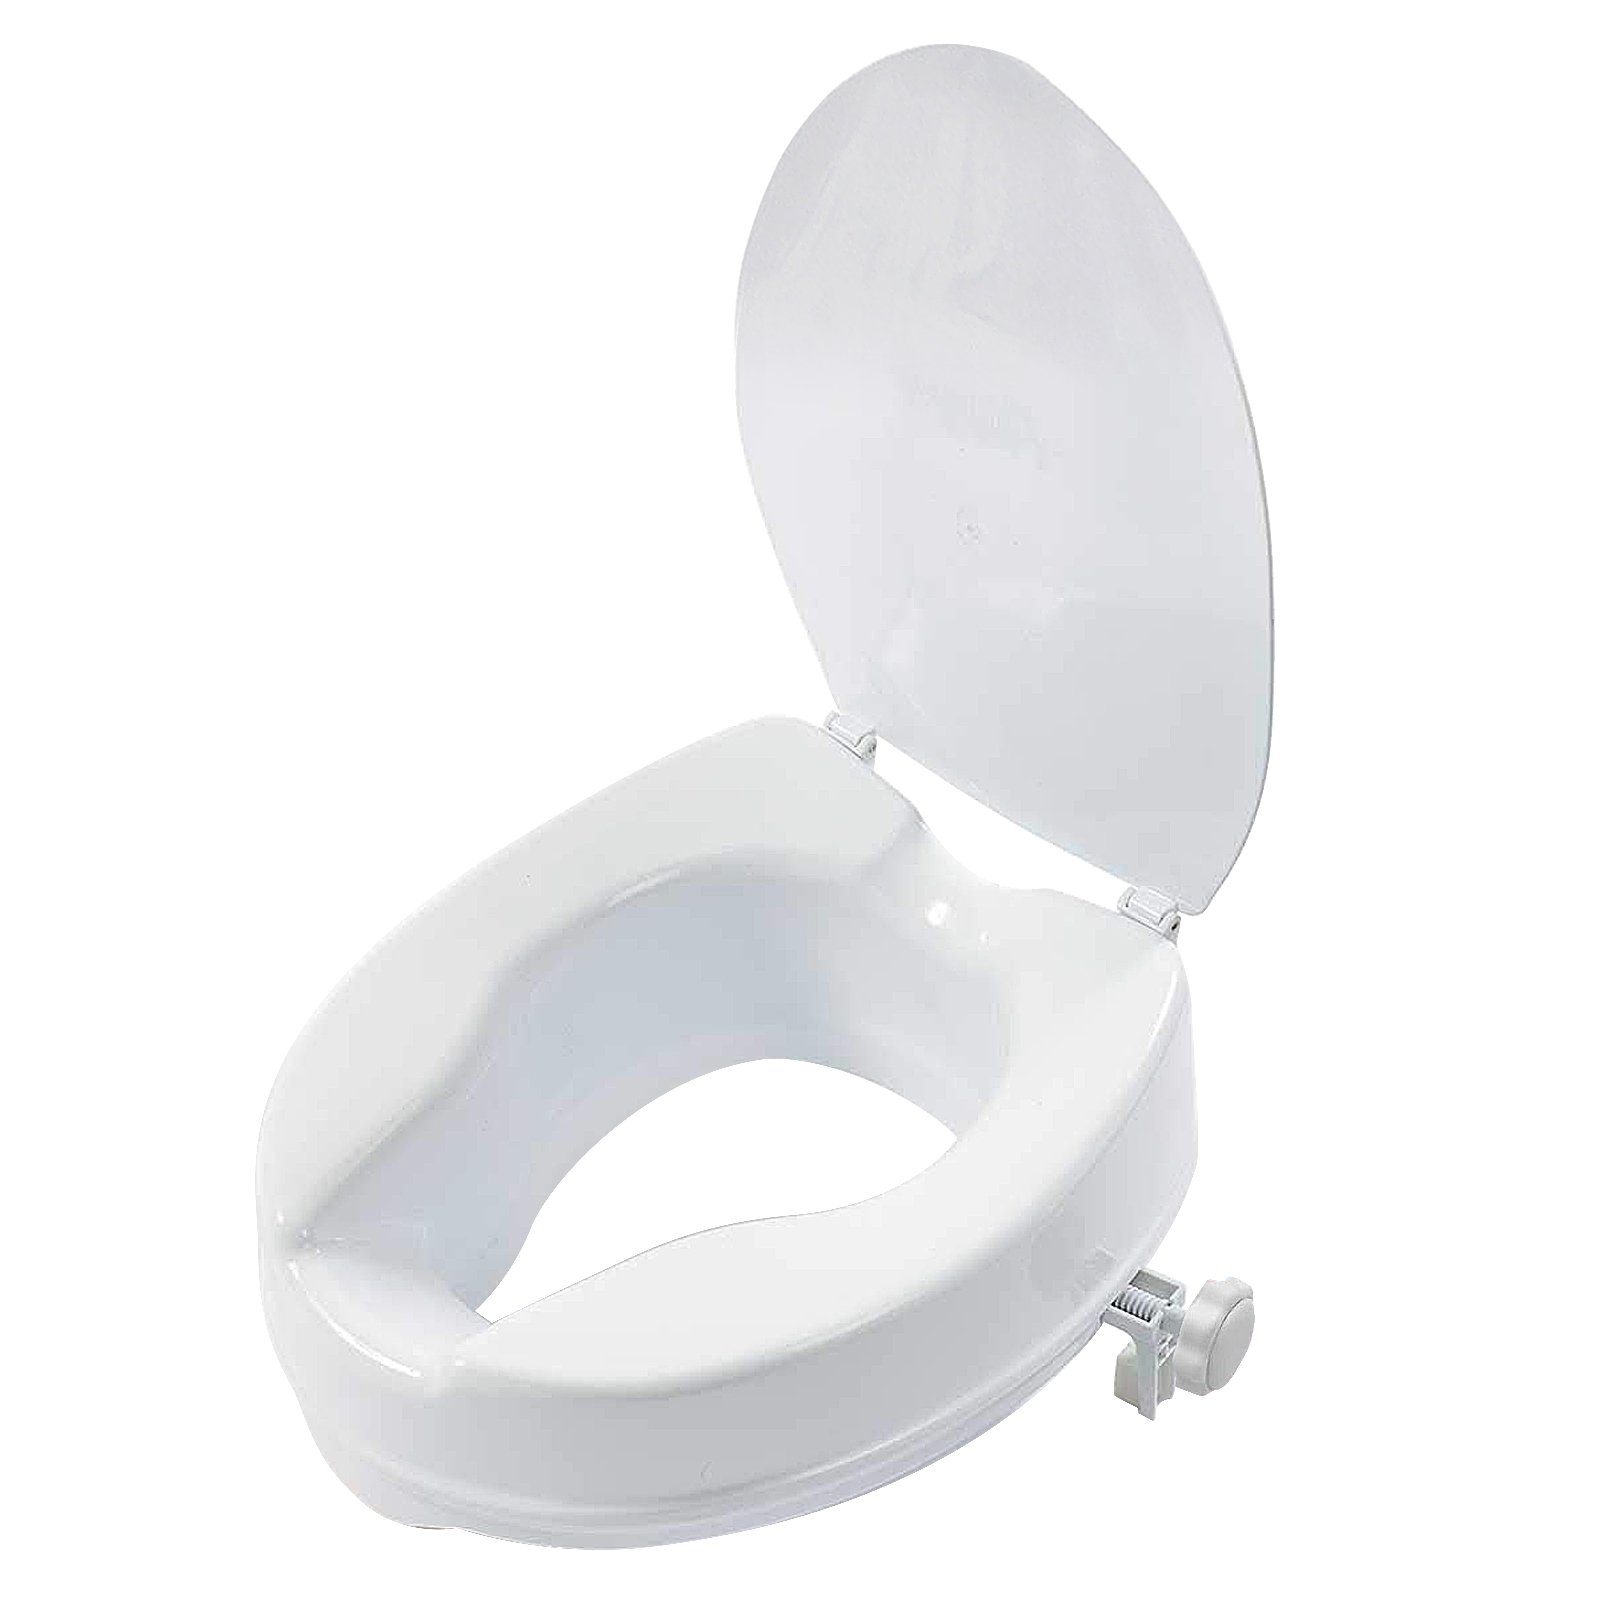 TWSOUL Toilettensitzerhöhung Toilettenerhöhung, Toilettenerhöhung mit Deckel, 6 cm, Tragfähigkeit 135 kg, Höhe 6/10/16 cm